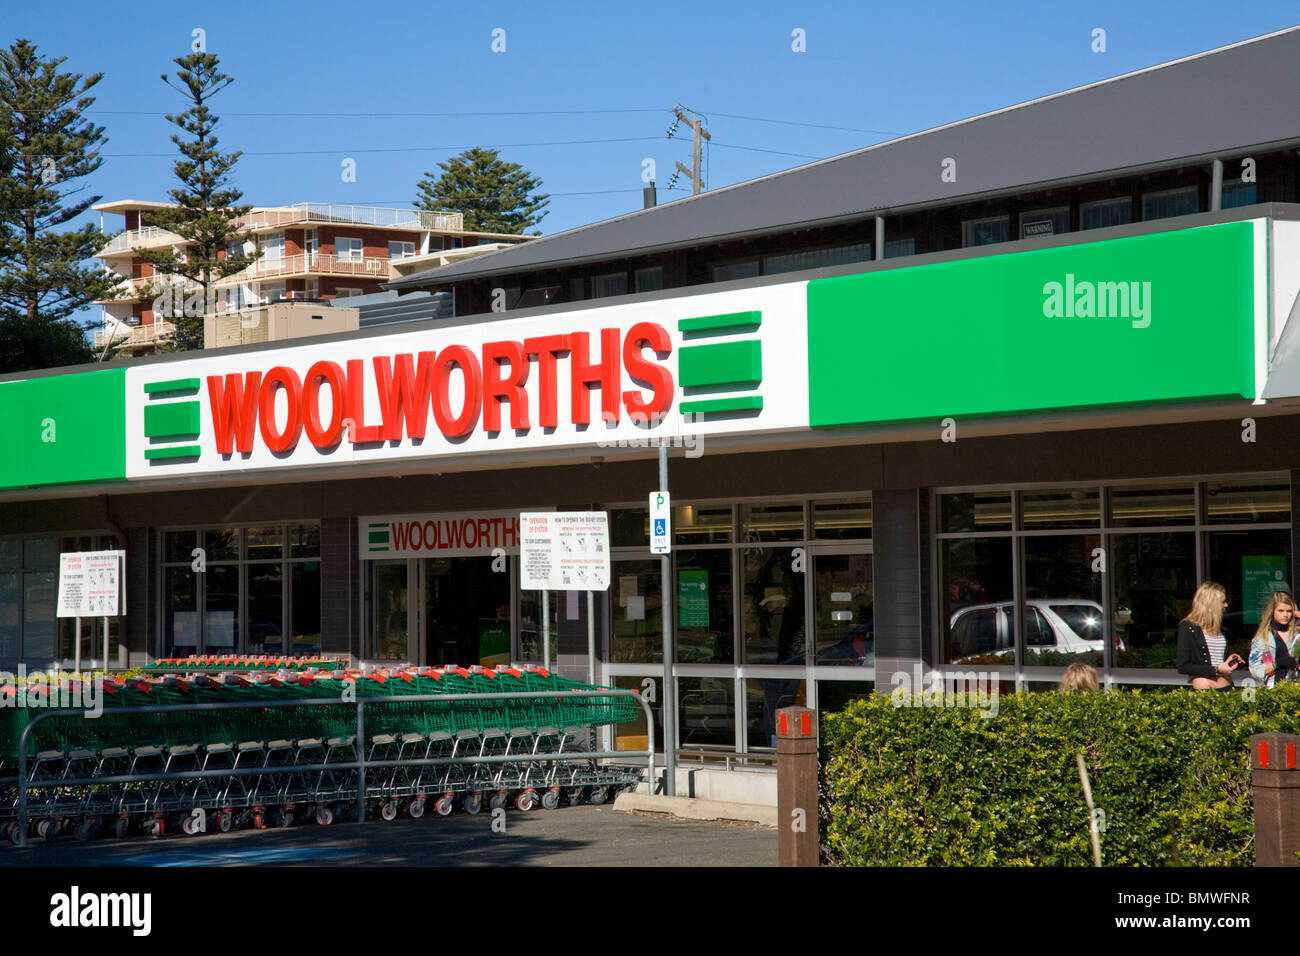 Woolworths australiana di catena di supermercati Foto Stock